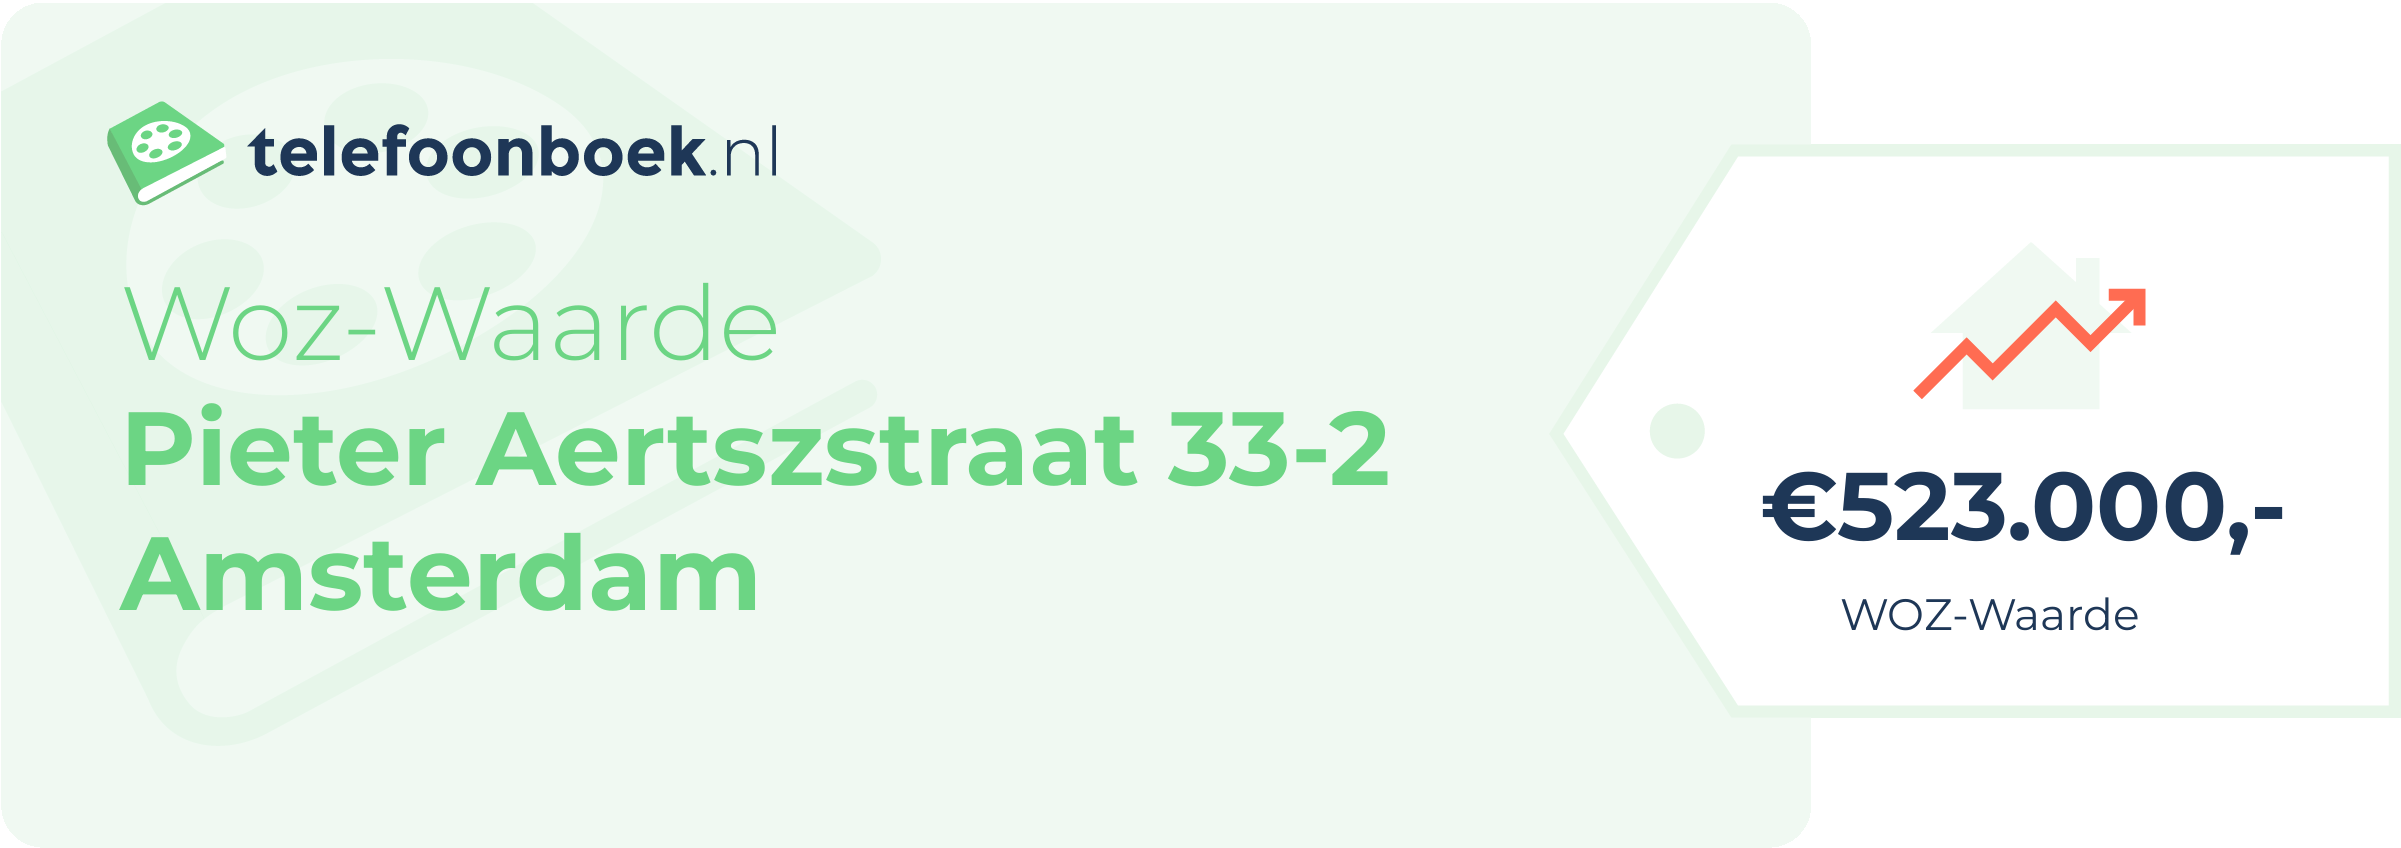 WOZ-waarde Pieter Aertszstraat 33-2 Amsterdam